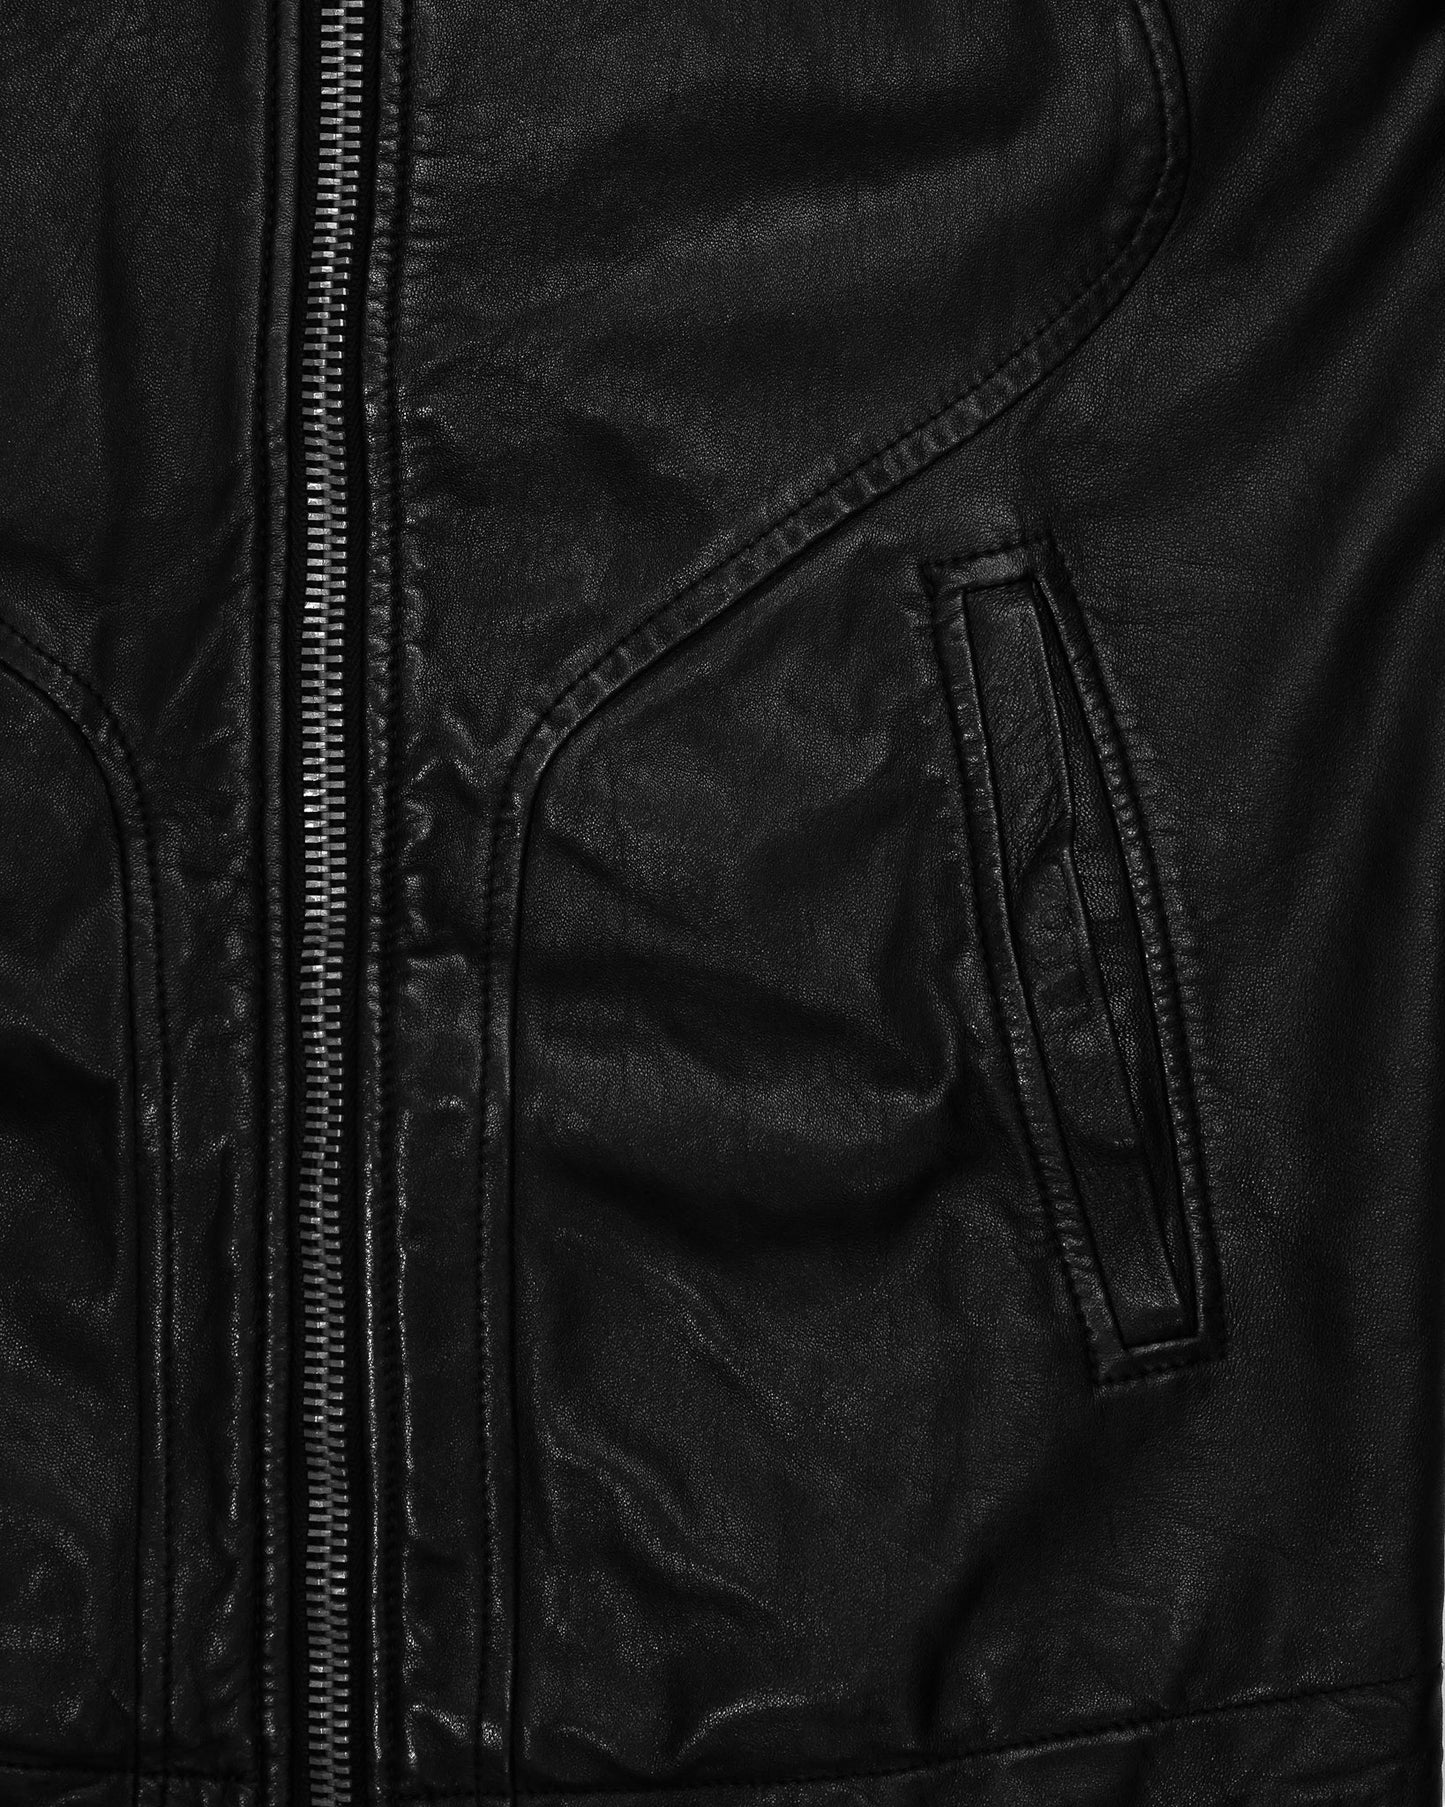 Rick Owens Intarsia Leather Bomber Jacket